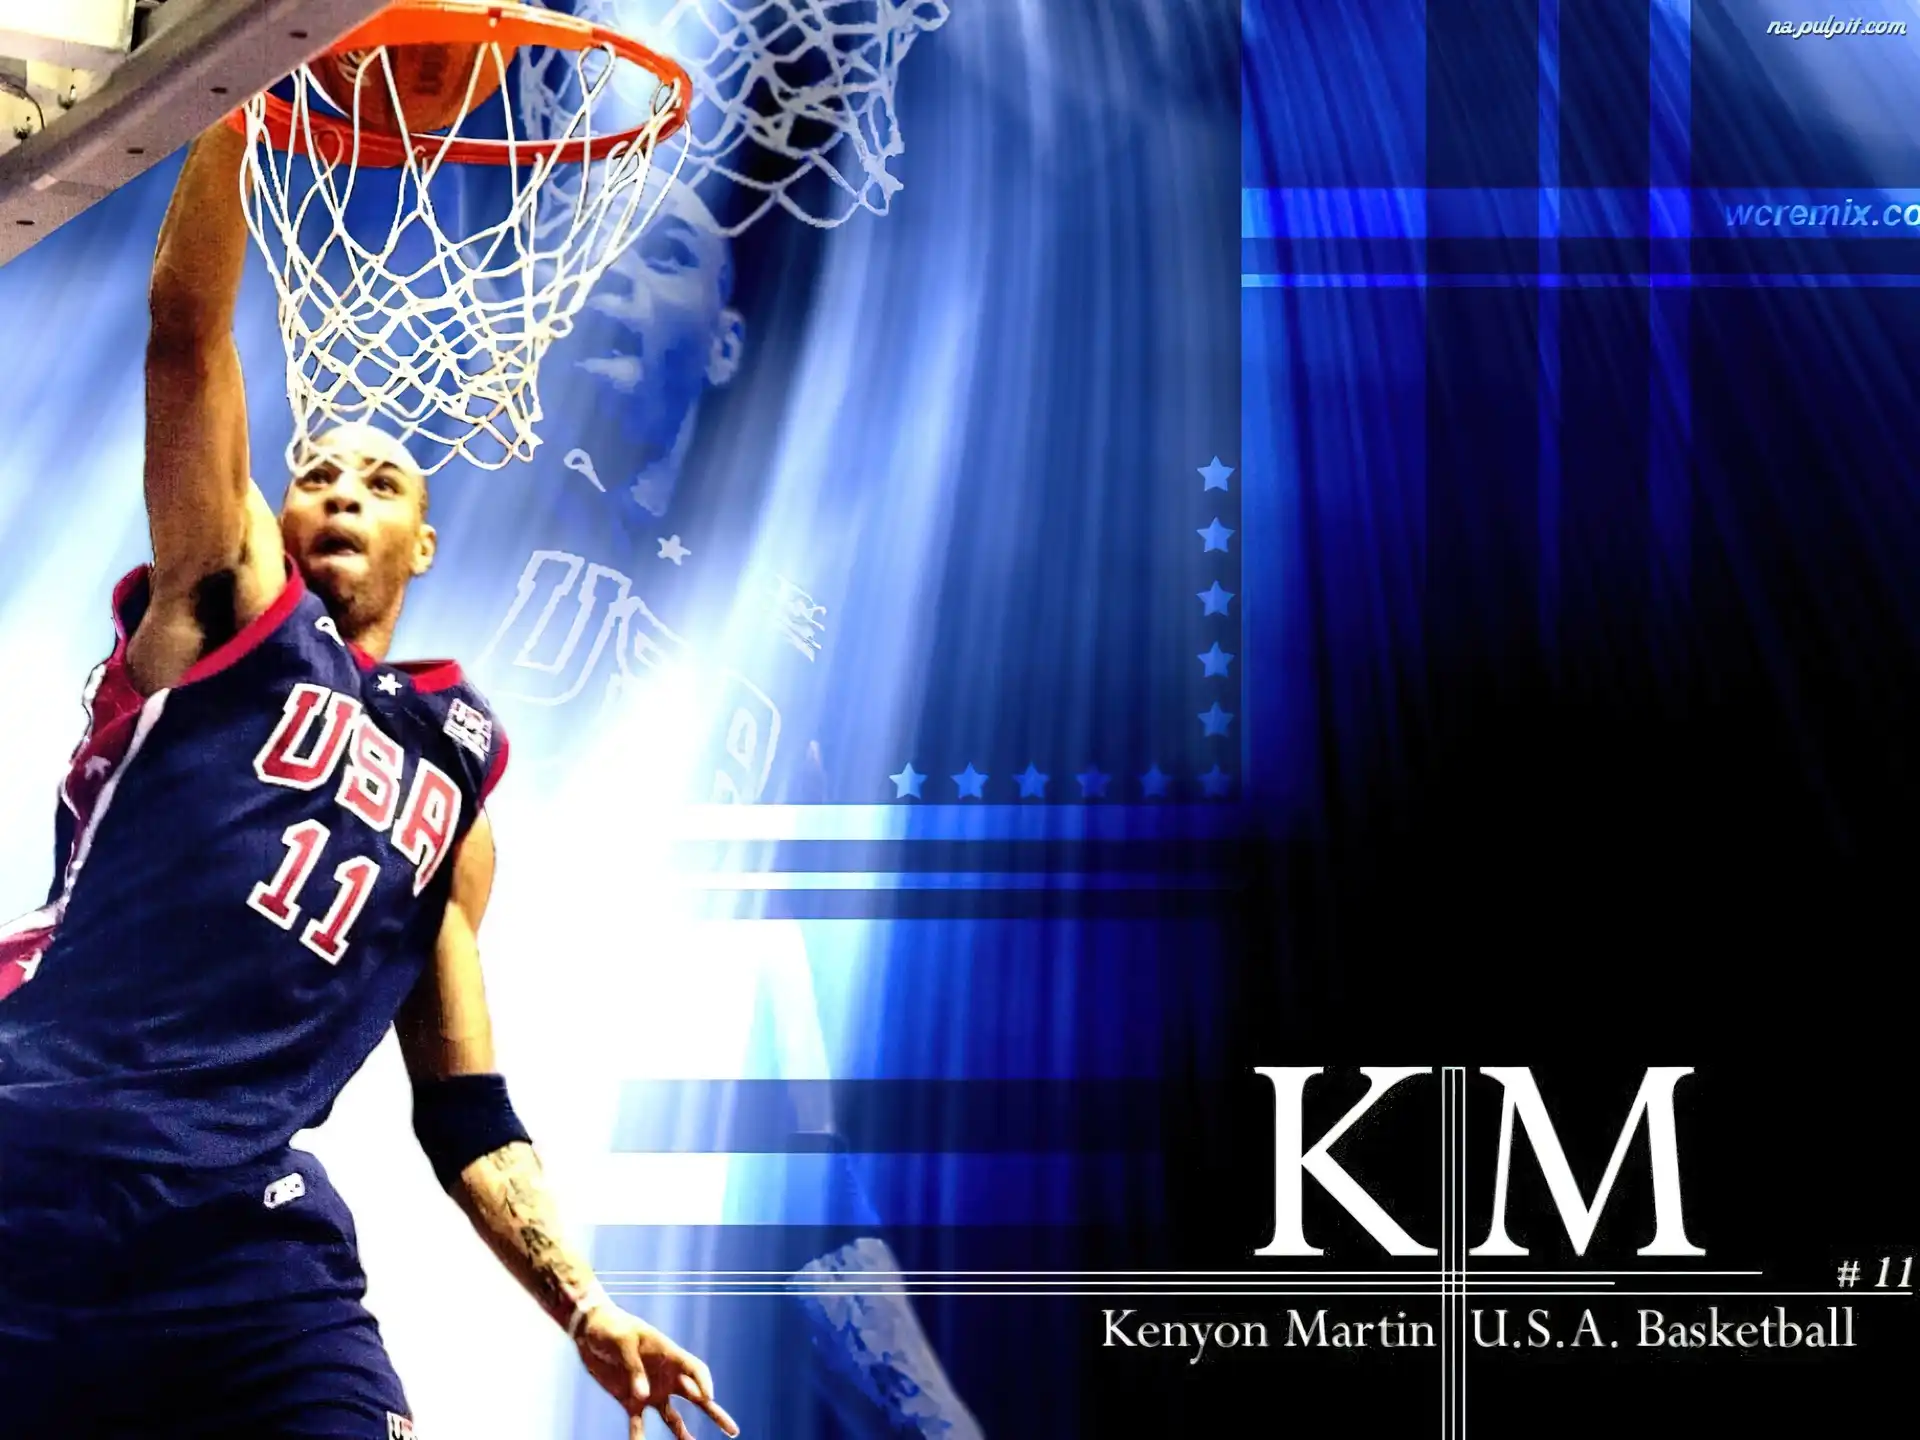 U.S.A Basketball, Koszykówka, Kenyon Martin